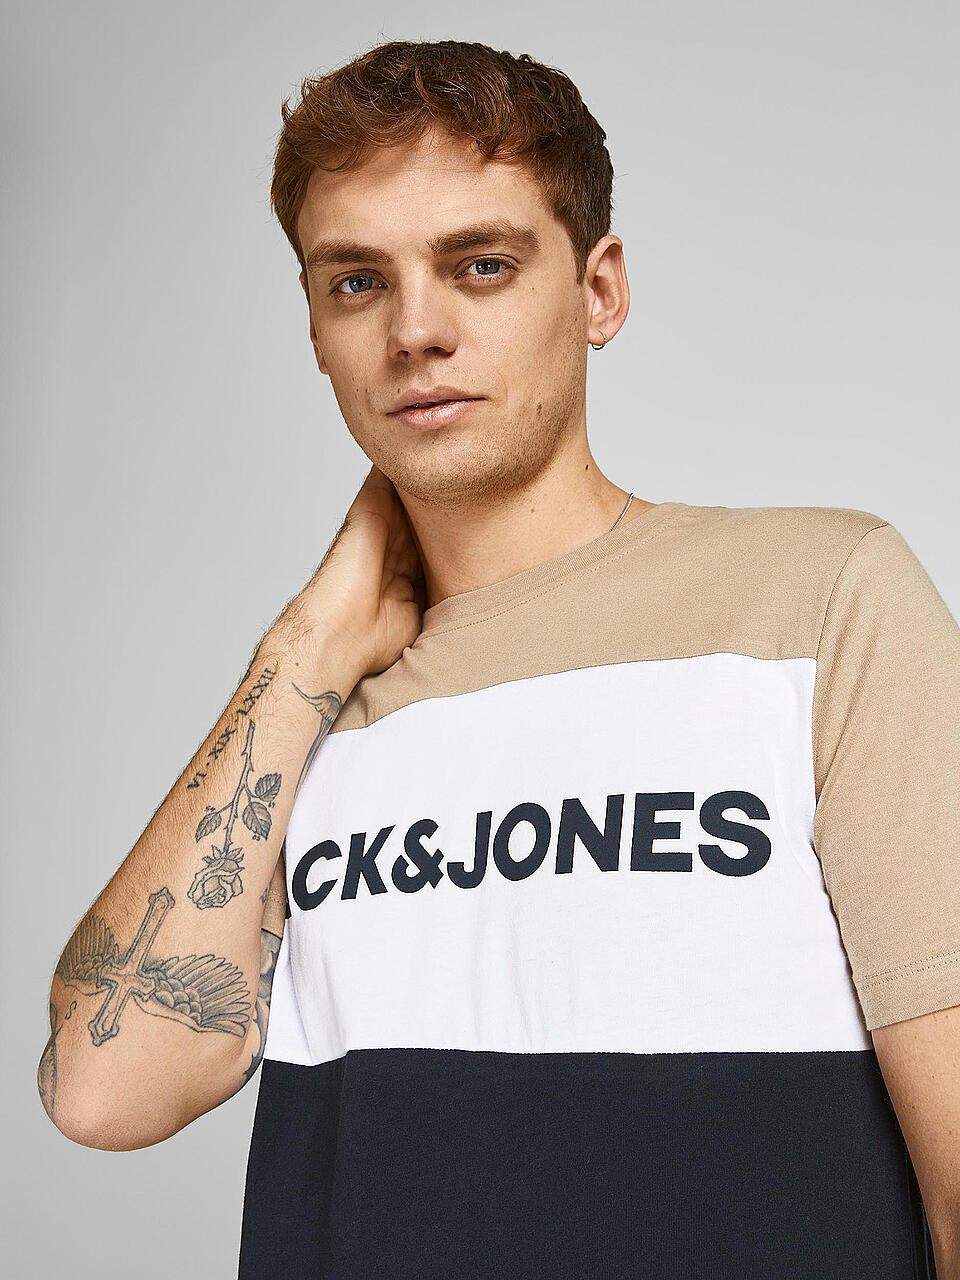 JACK & JONES | T Shirt JJELOGO | beige